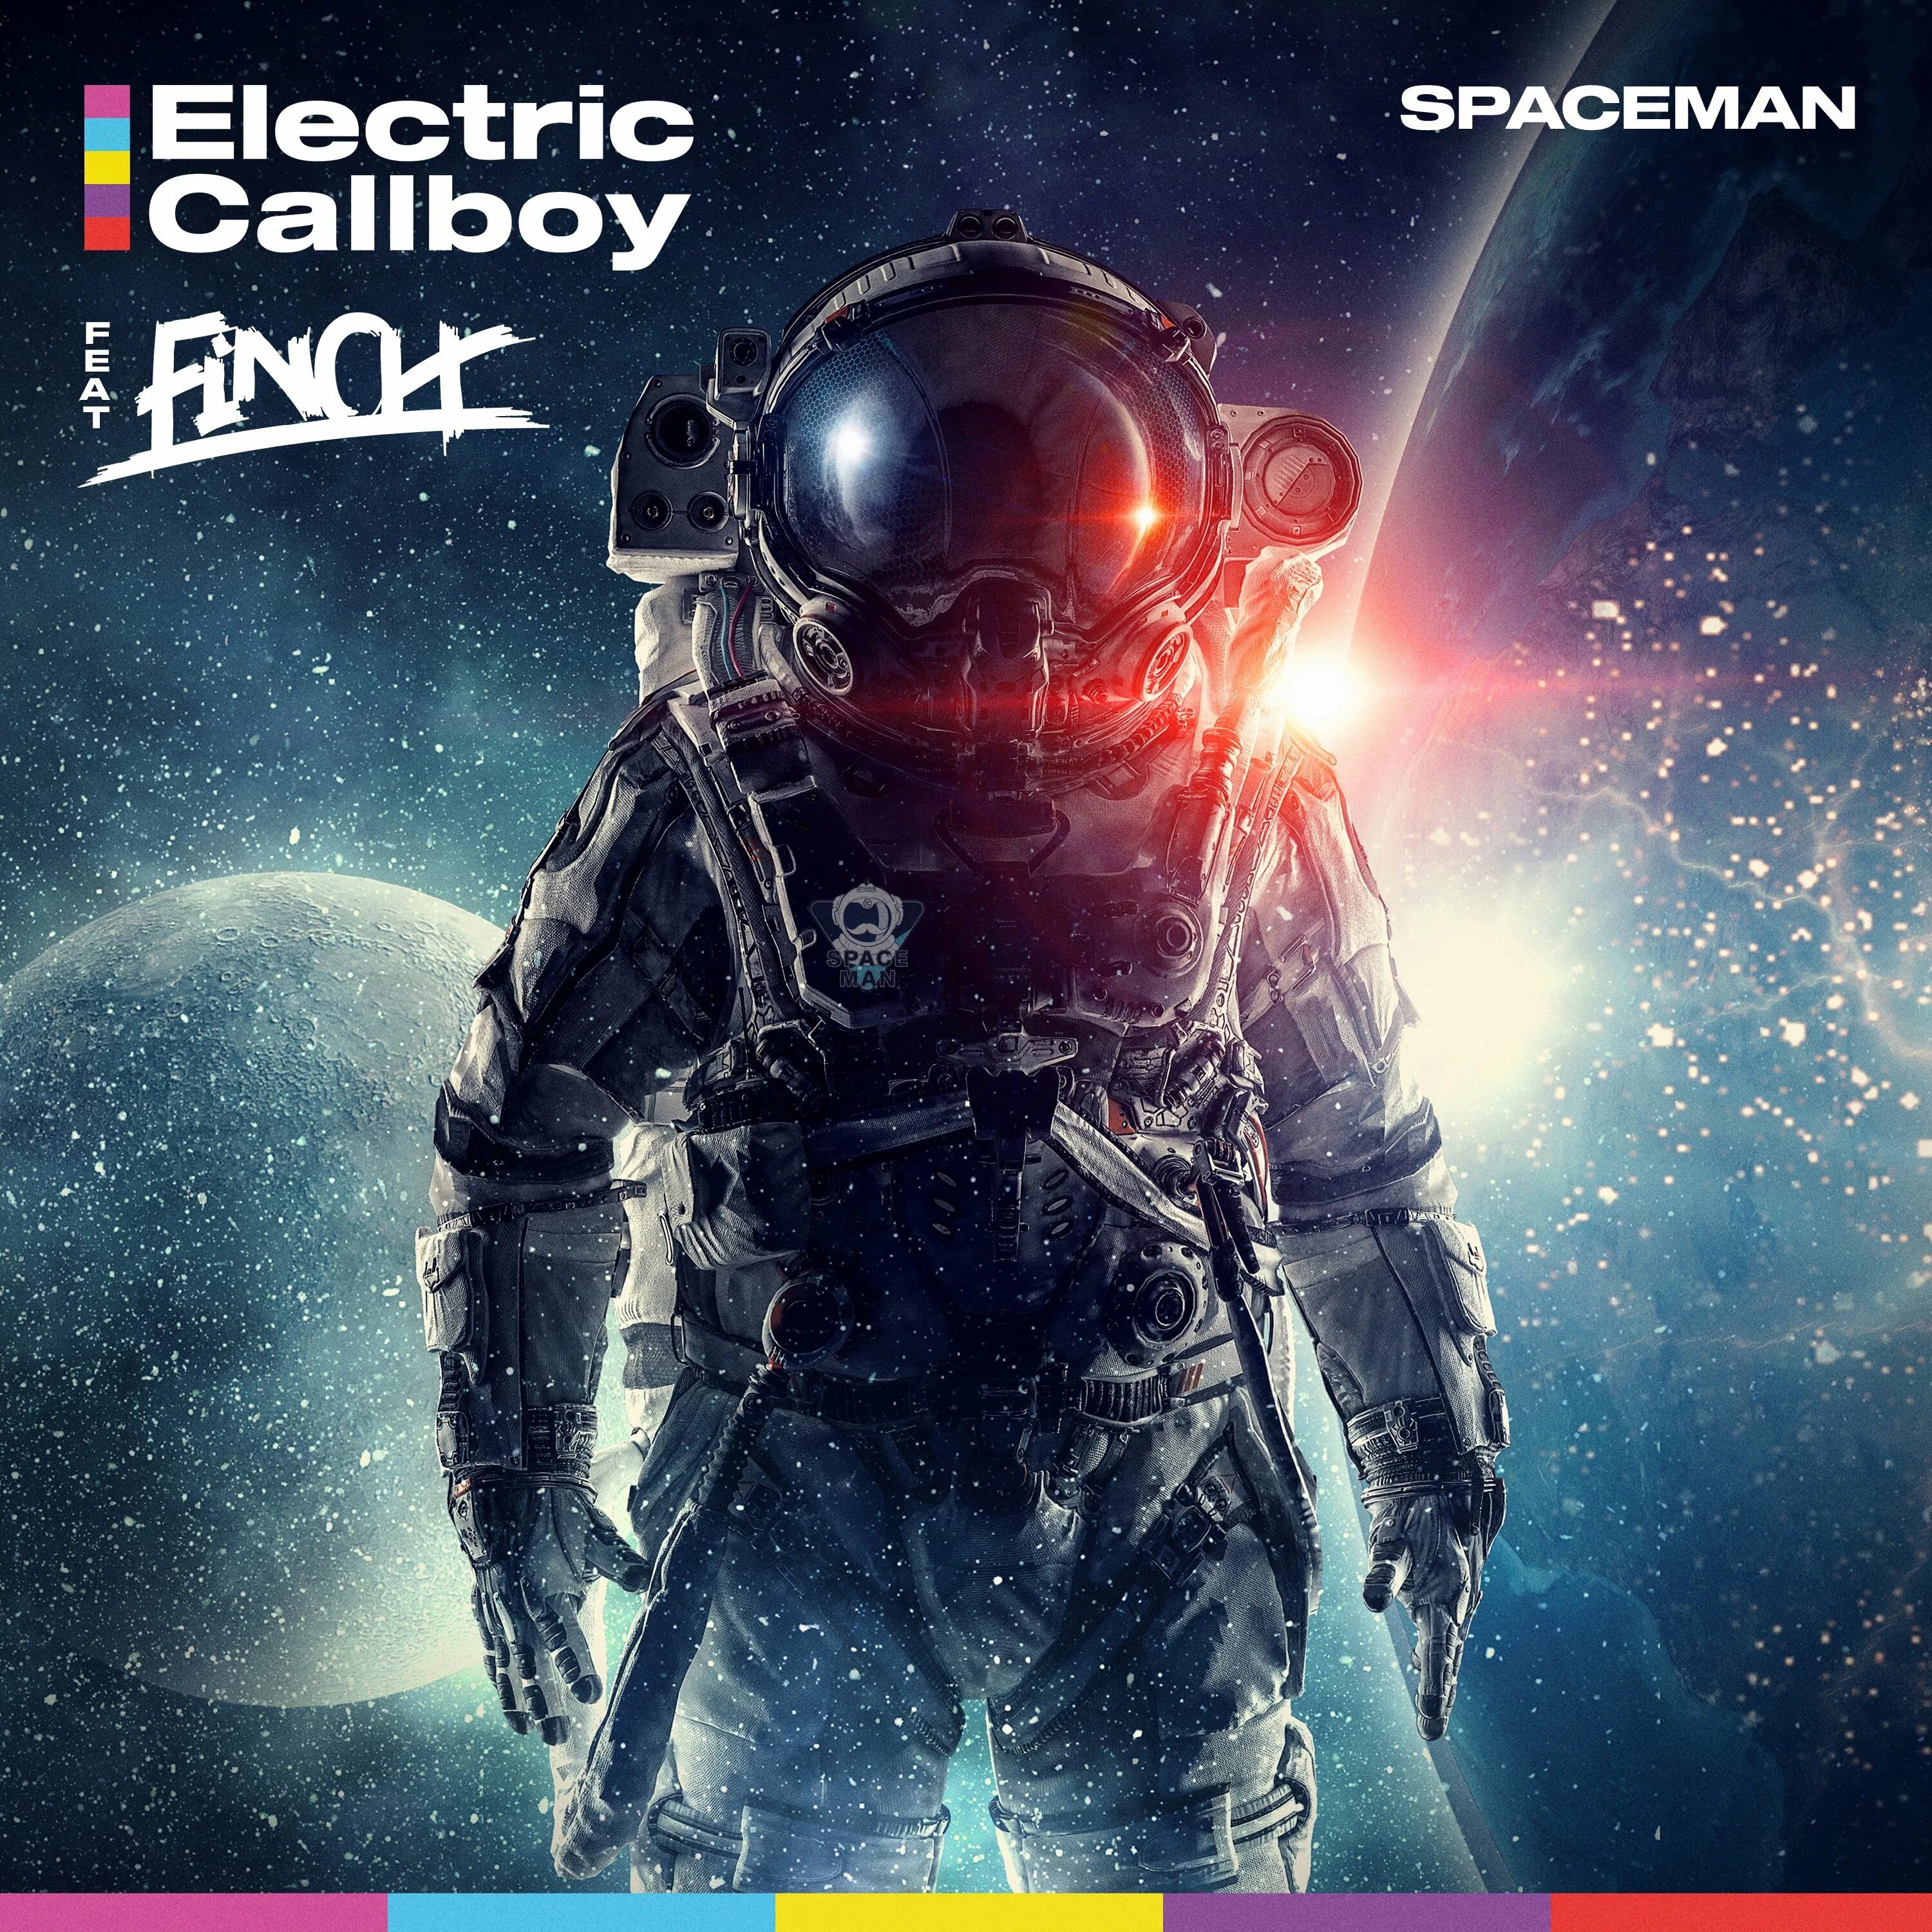 Electric Callboy Spaceman. Electric Callboy 2022. Electric Callboy - Spaceman (feat. Finch). Electric Callboy обложка.